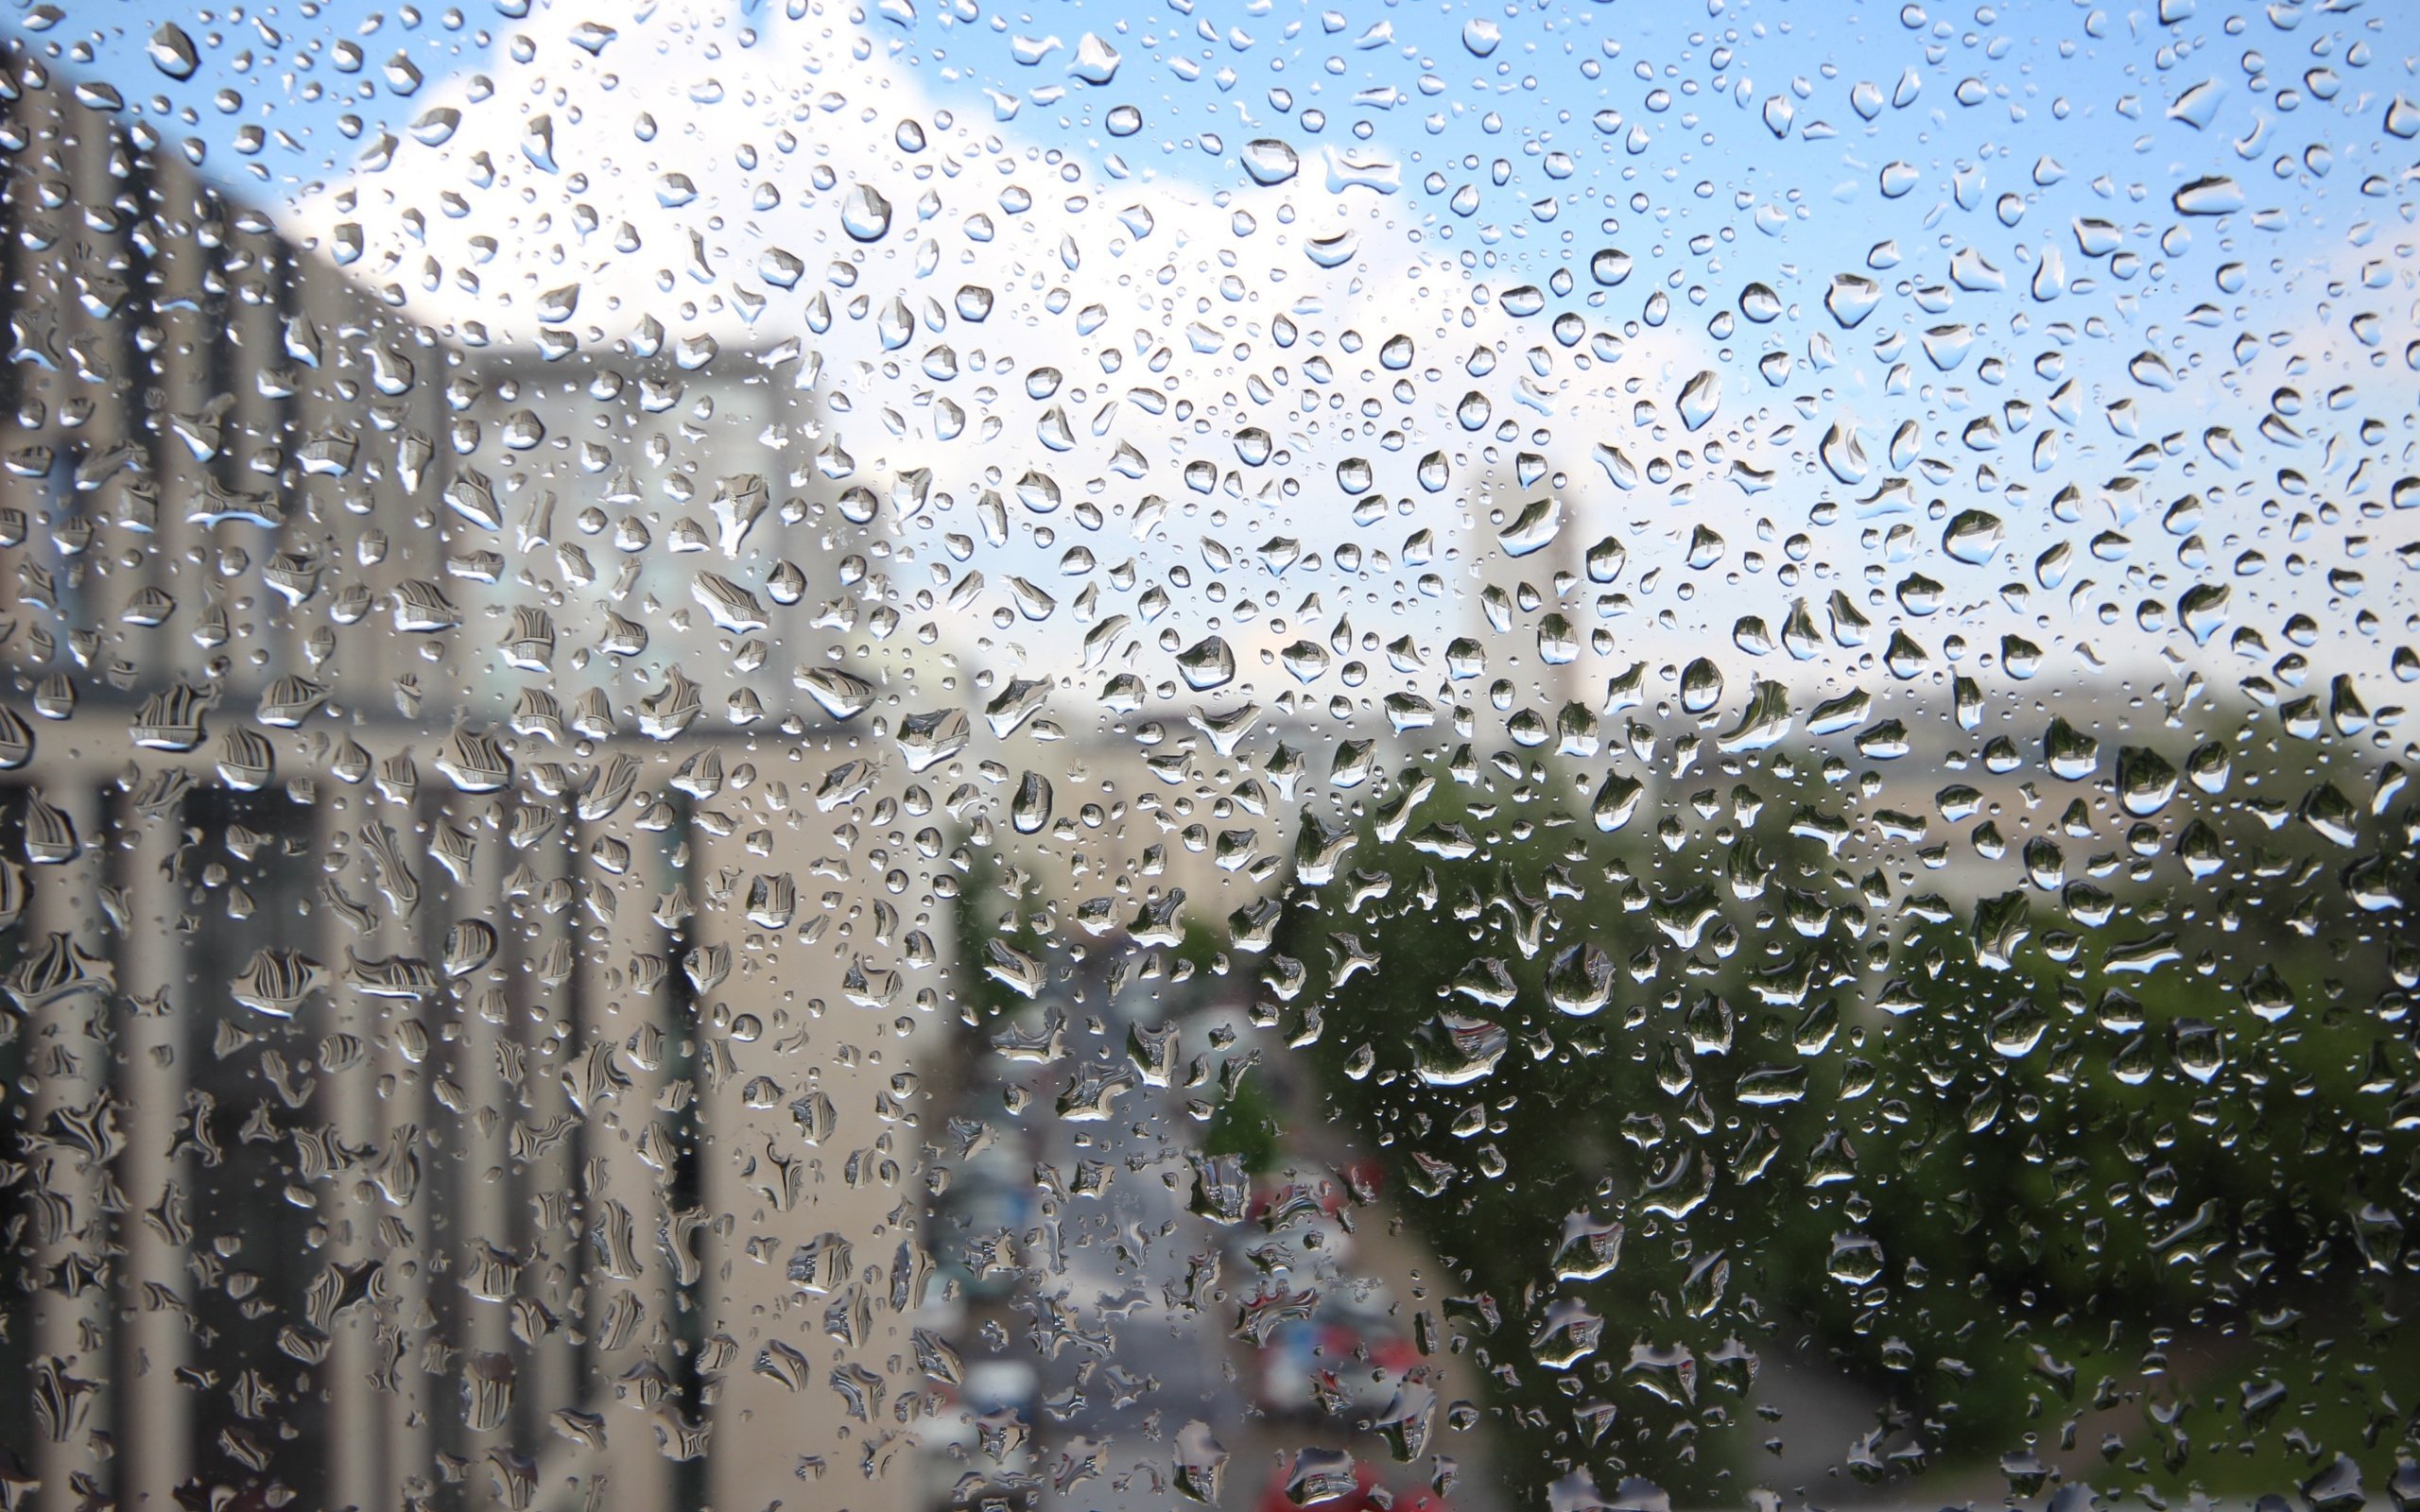 Картинка капли дождя. Капли на стекле. Капли дождя. Капли воды на стекле. Капли дождя на окне.